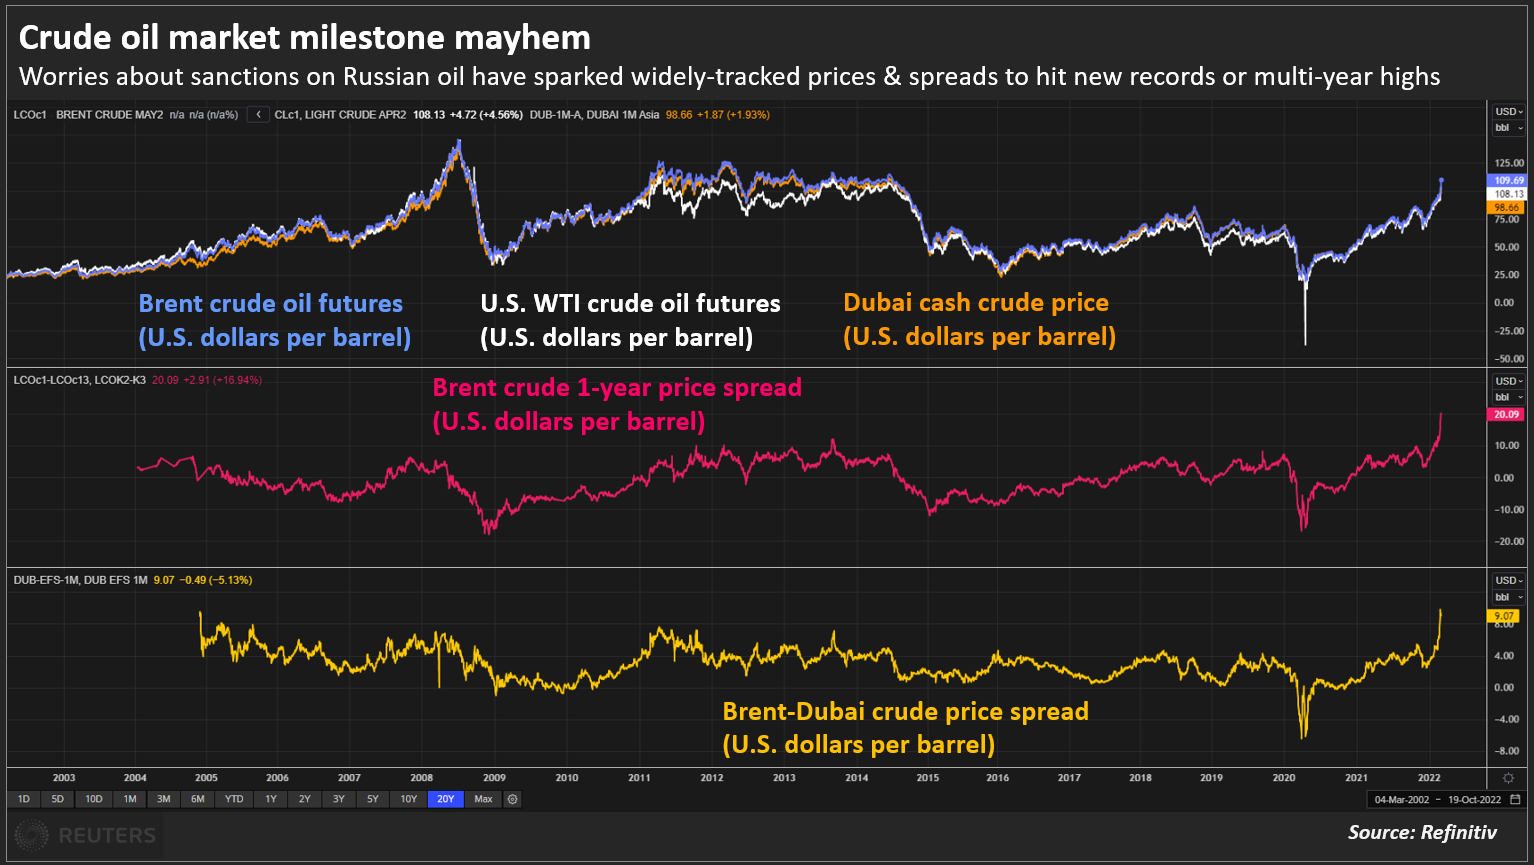 Crude oil market milestone mayhem